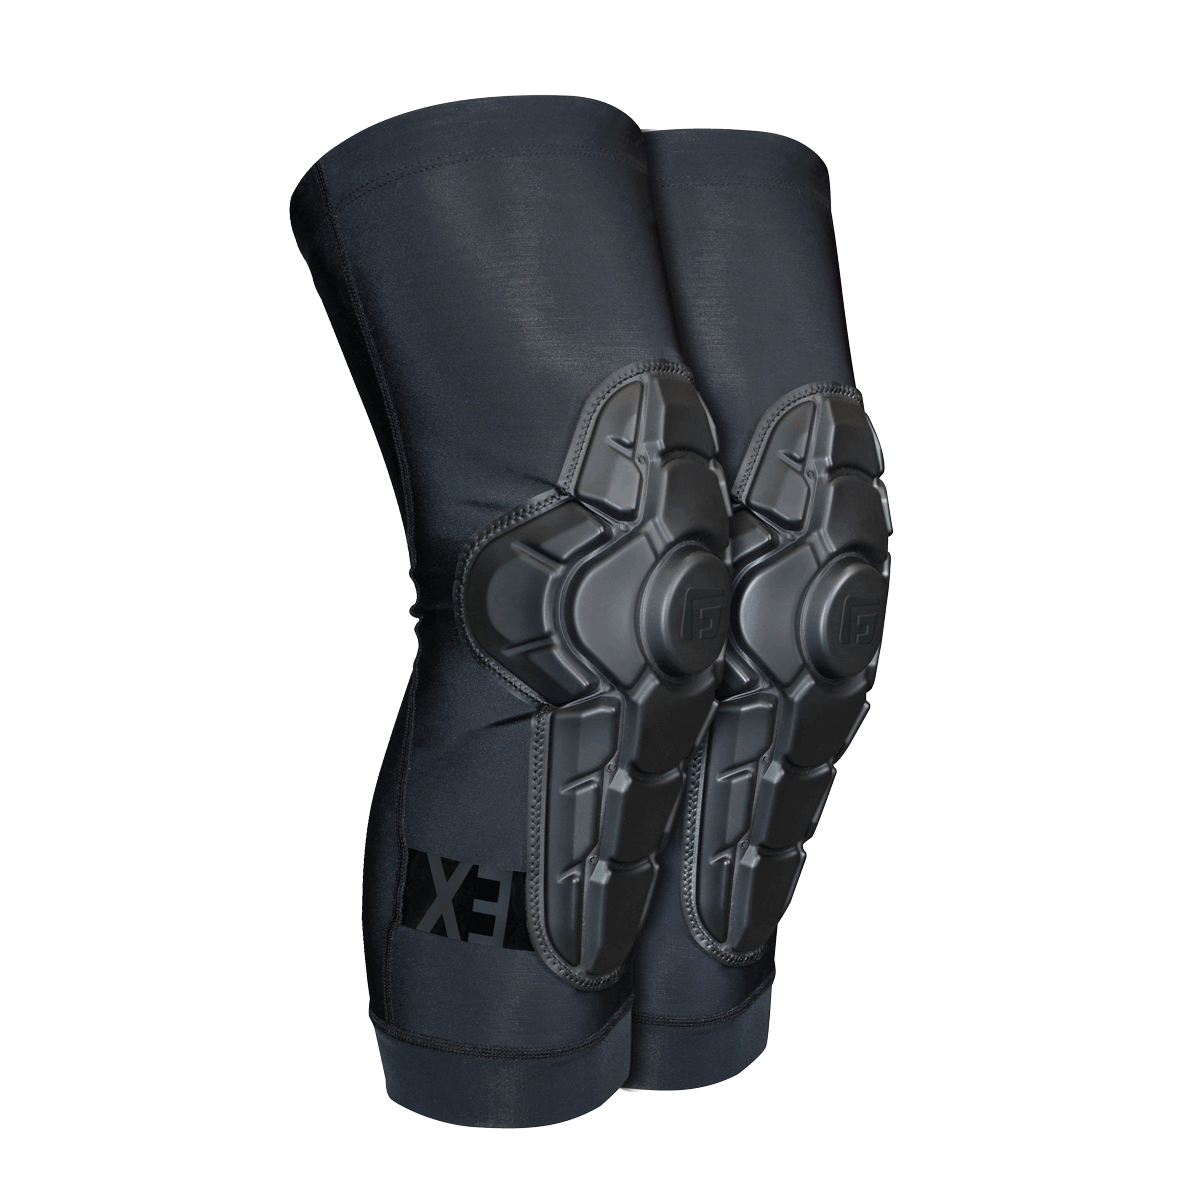 G-Form Pro-X3 Knee Guards| Lightweight, Heavy-Duty MTB Knee Pads